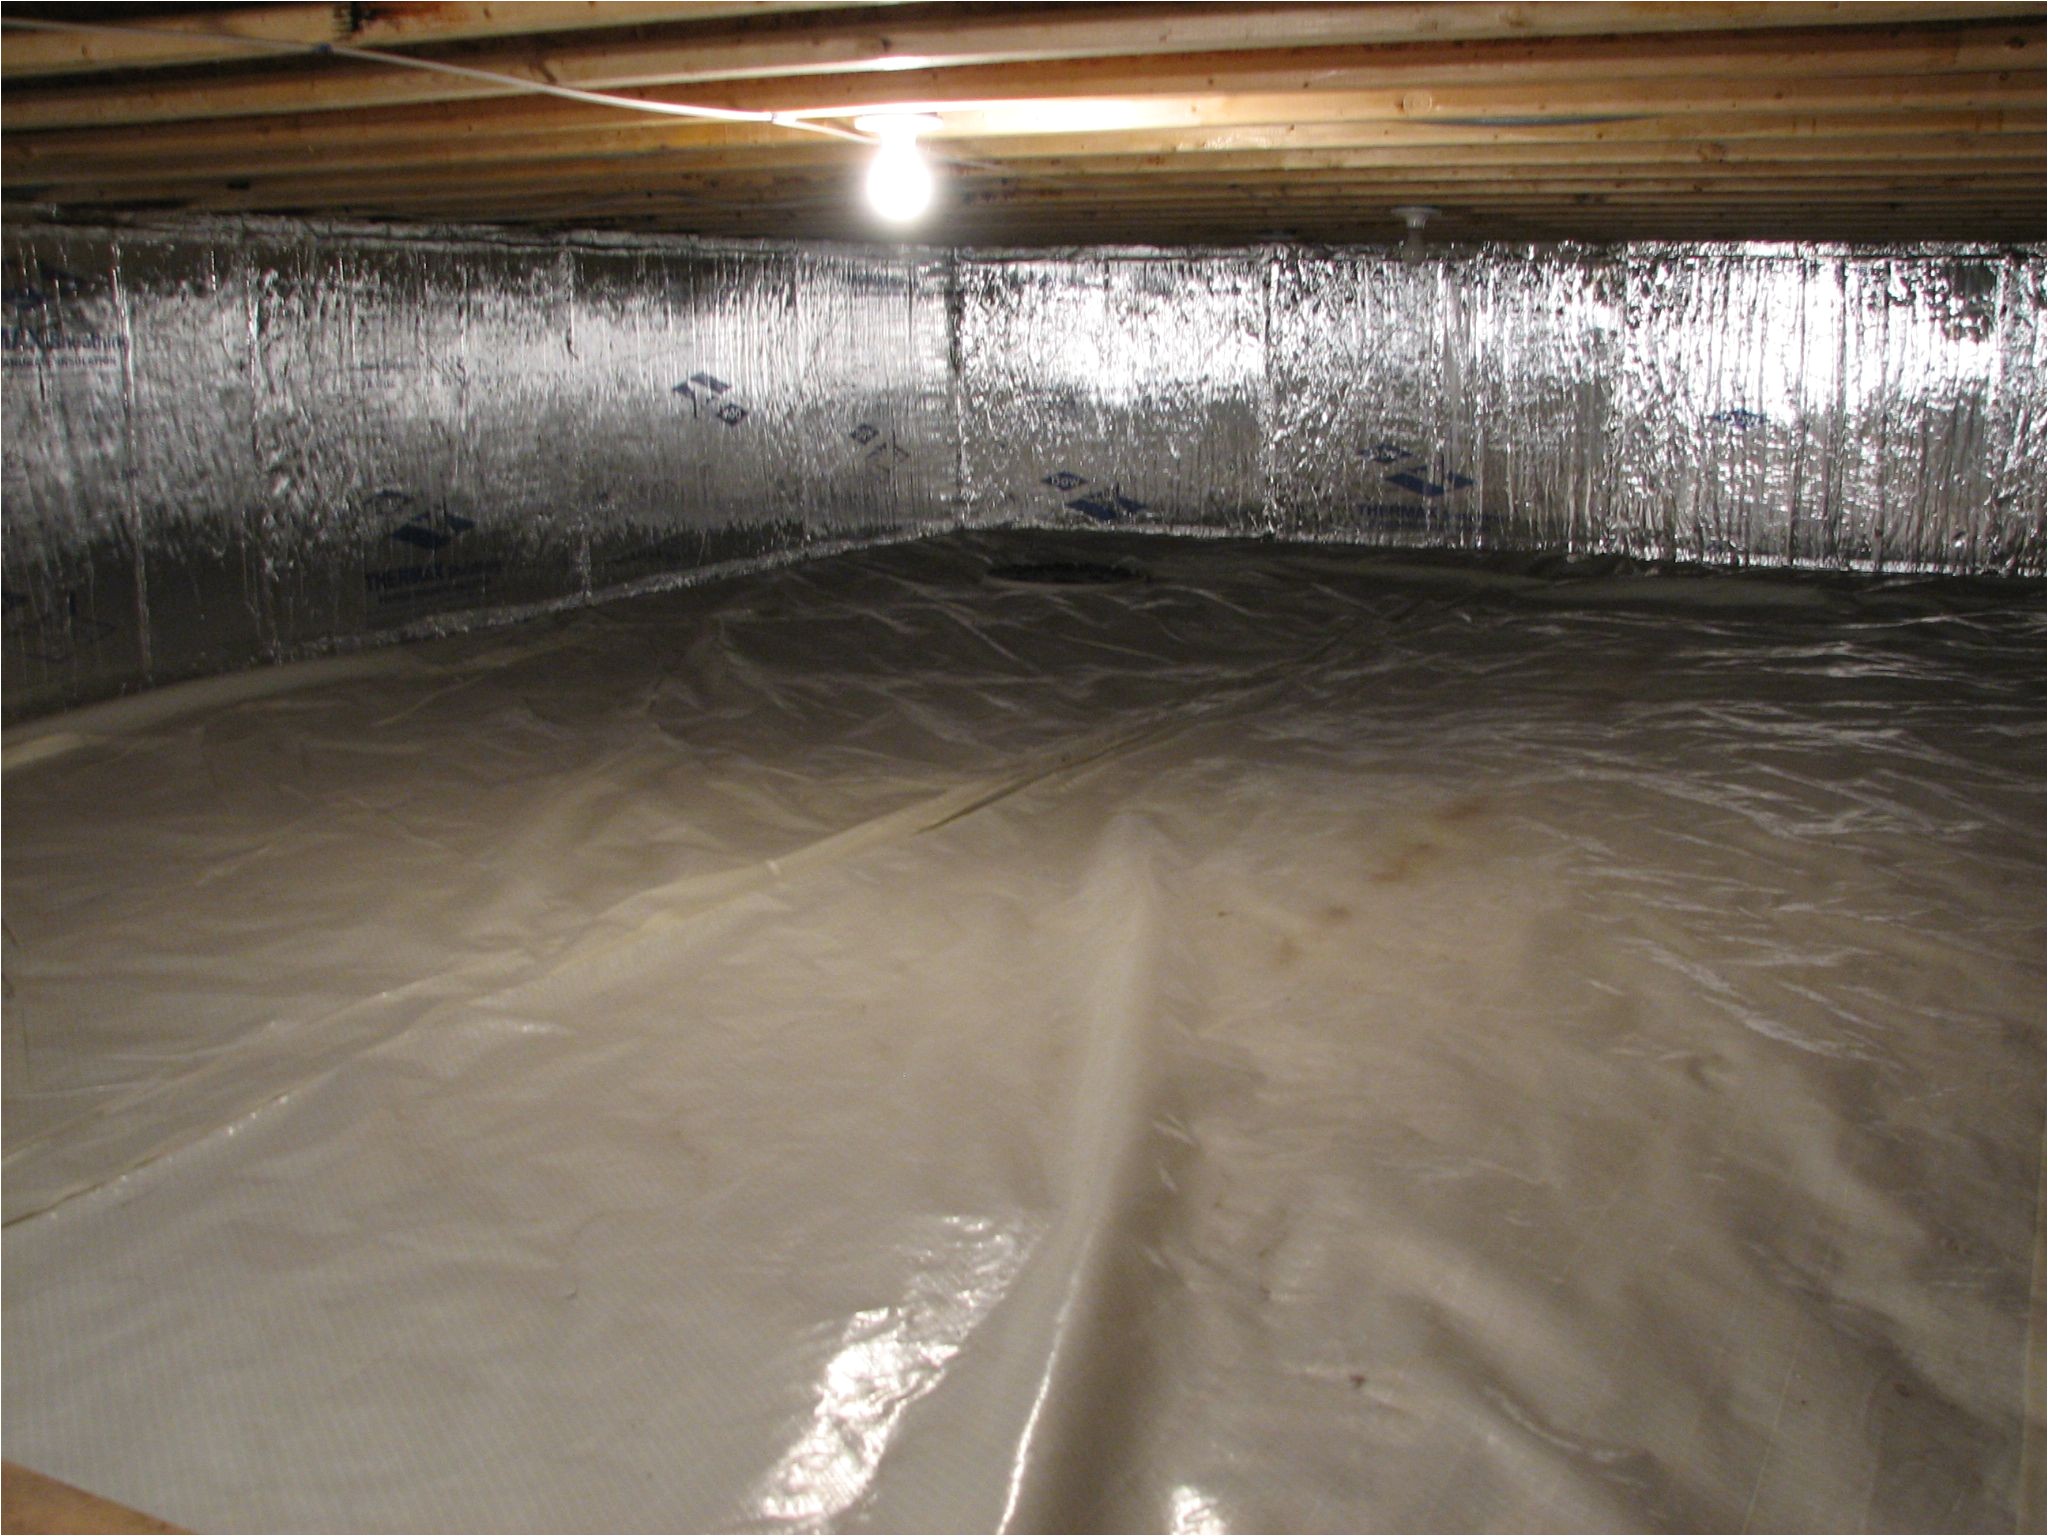 crawl space foundation insulation vapor barrier